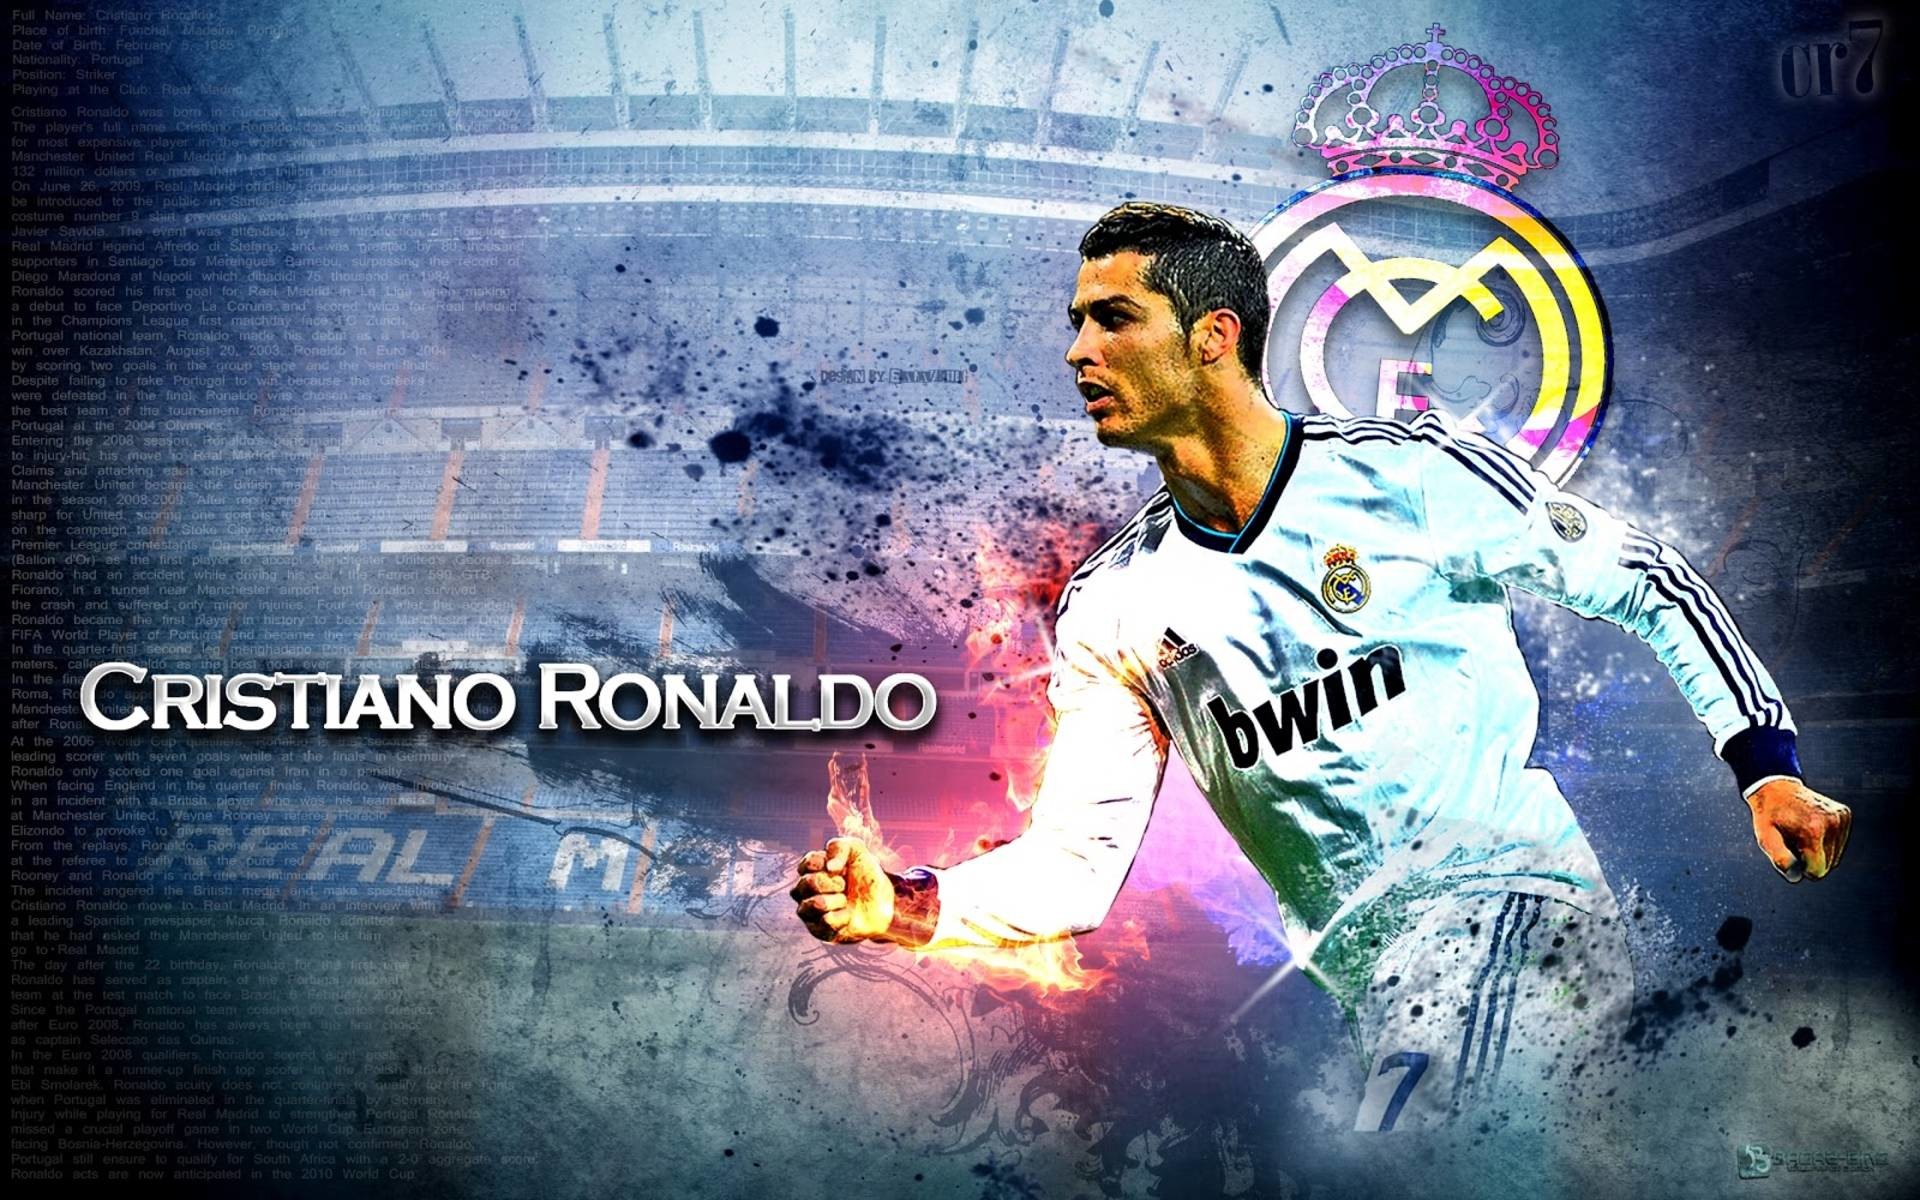 Cristiano Ronaldo Mobile Wallpaper by NewGenGFX on DeviantArt